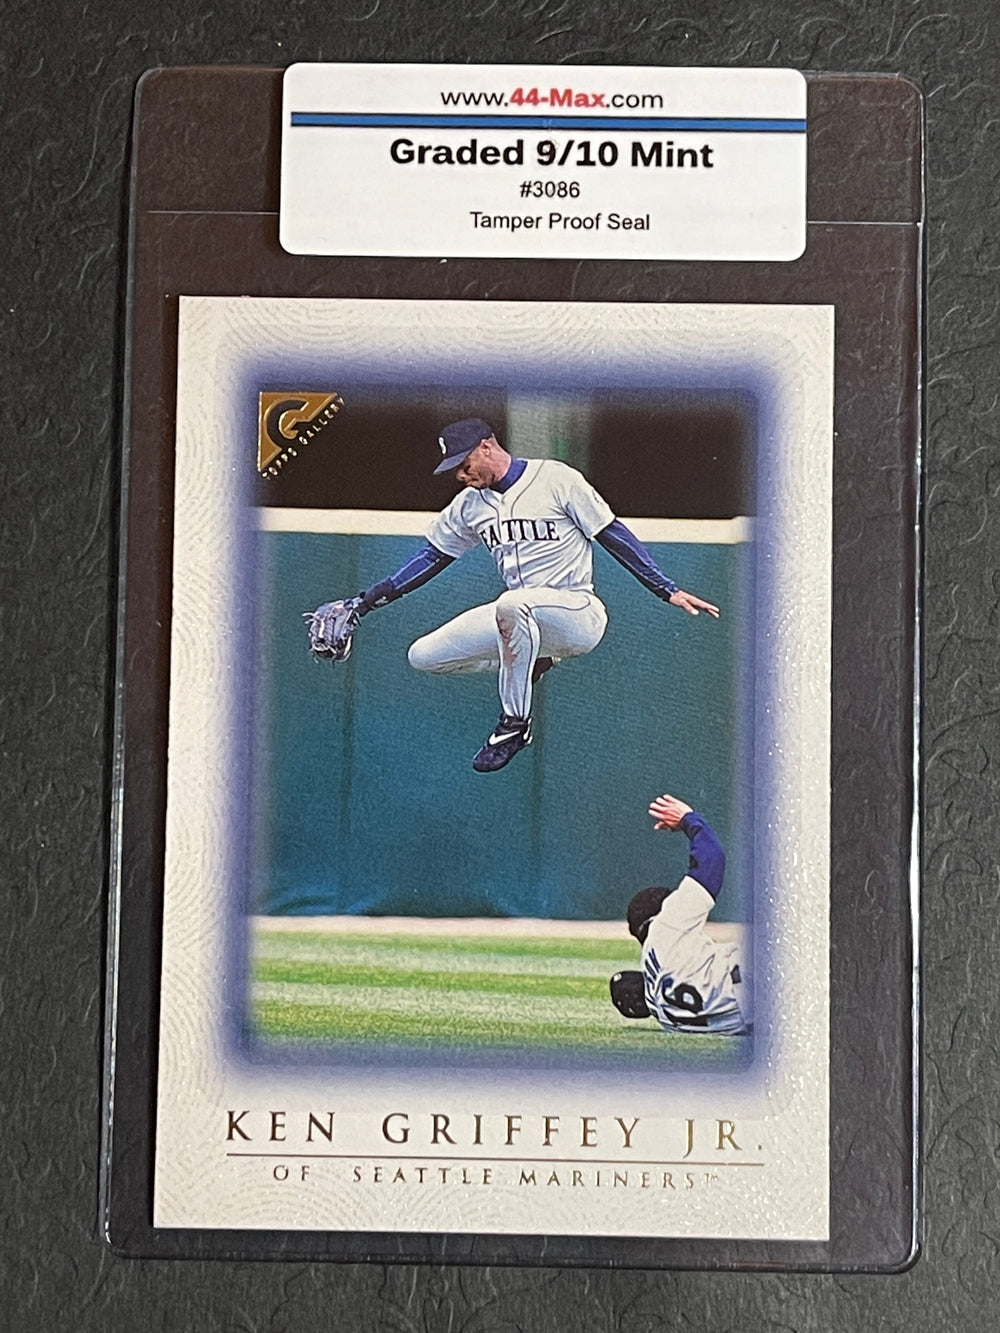 Ken Griffey Jr 1999 Gallery #6 Mariners Card. 44-Max 9/10 Mint #3086